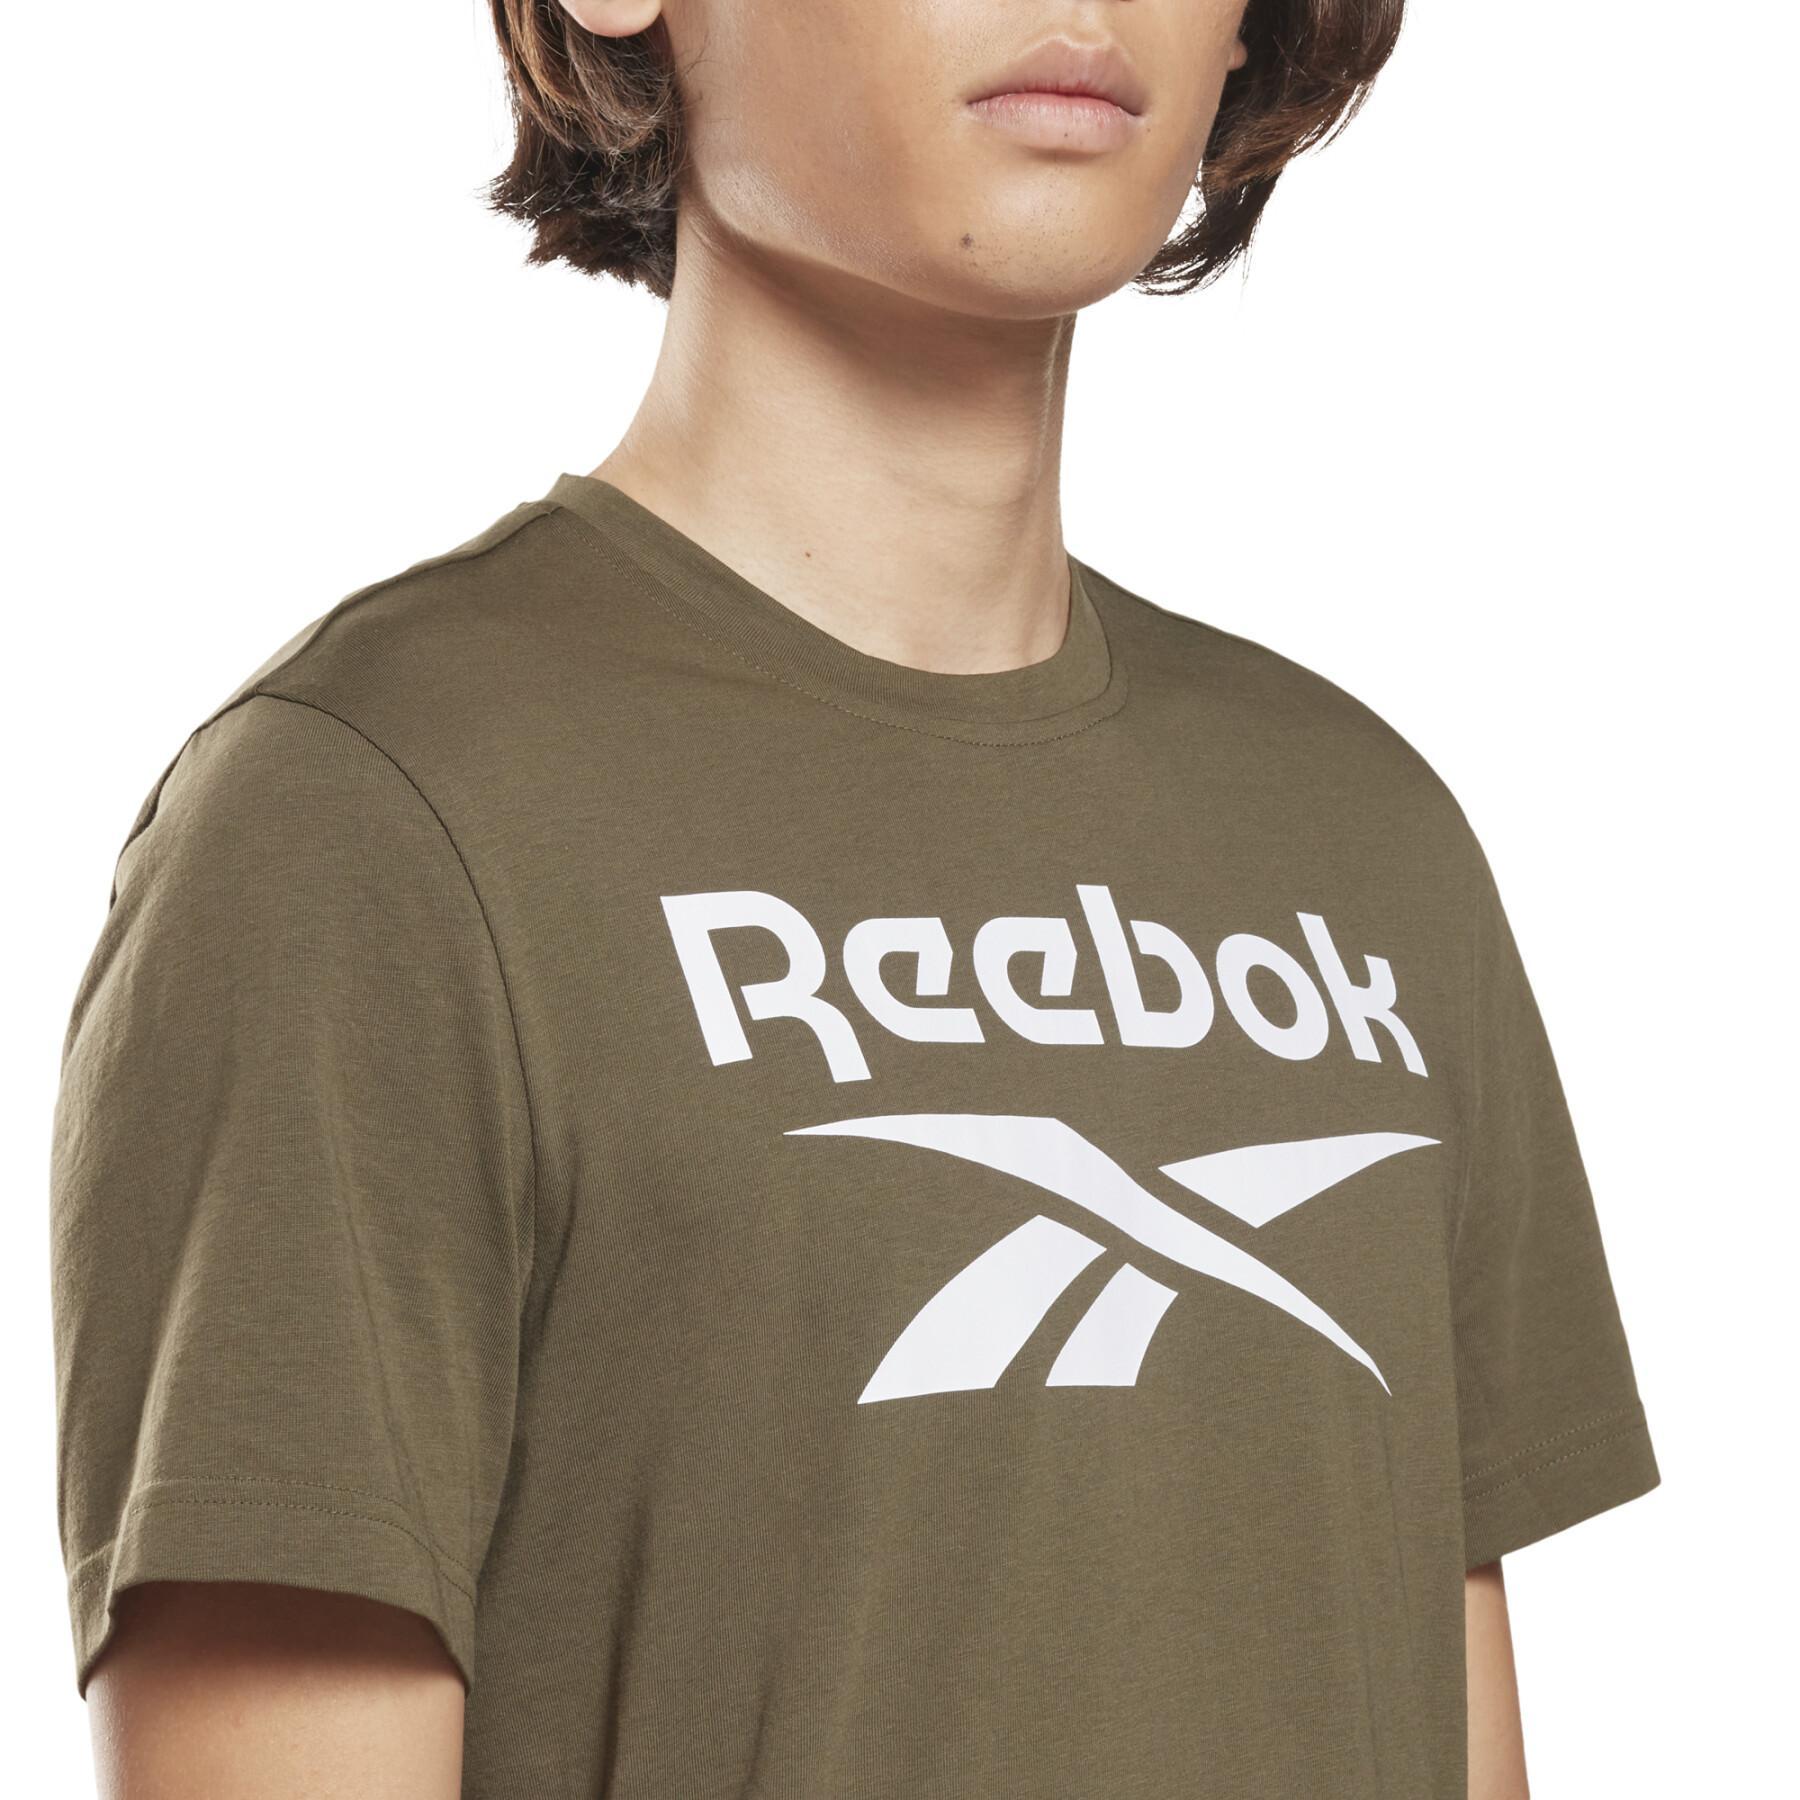 T-shirt Reebok Identity Big Logo